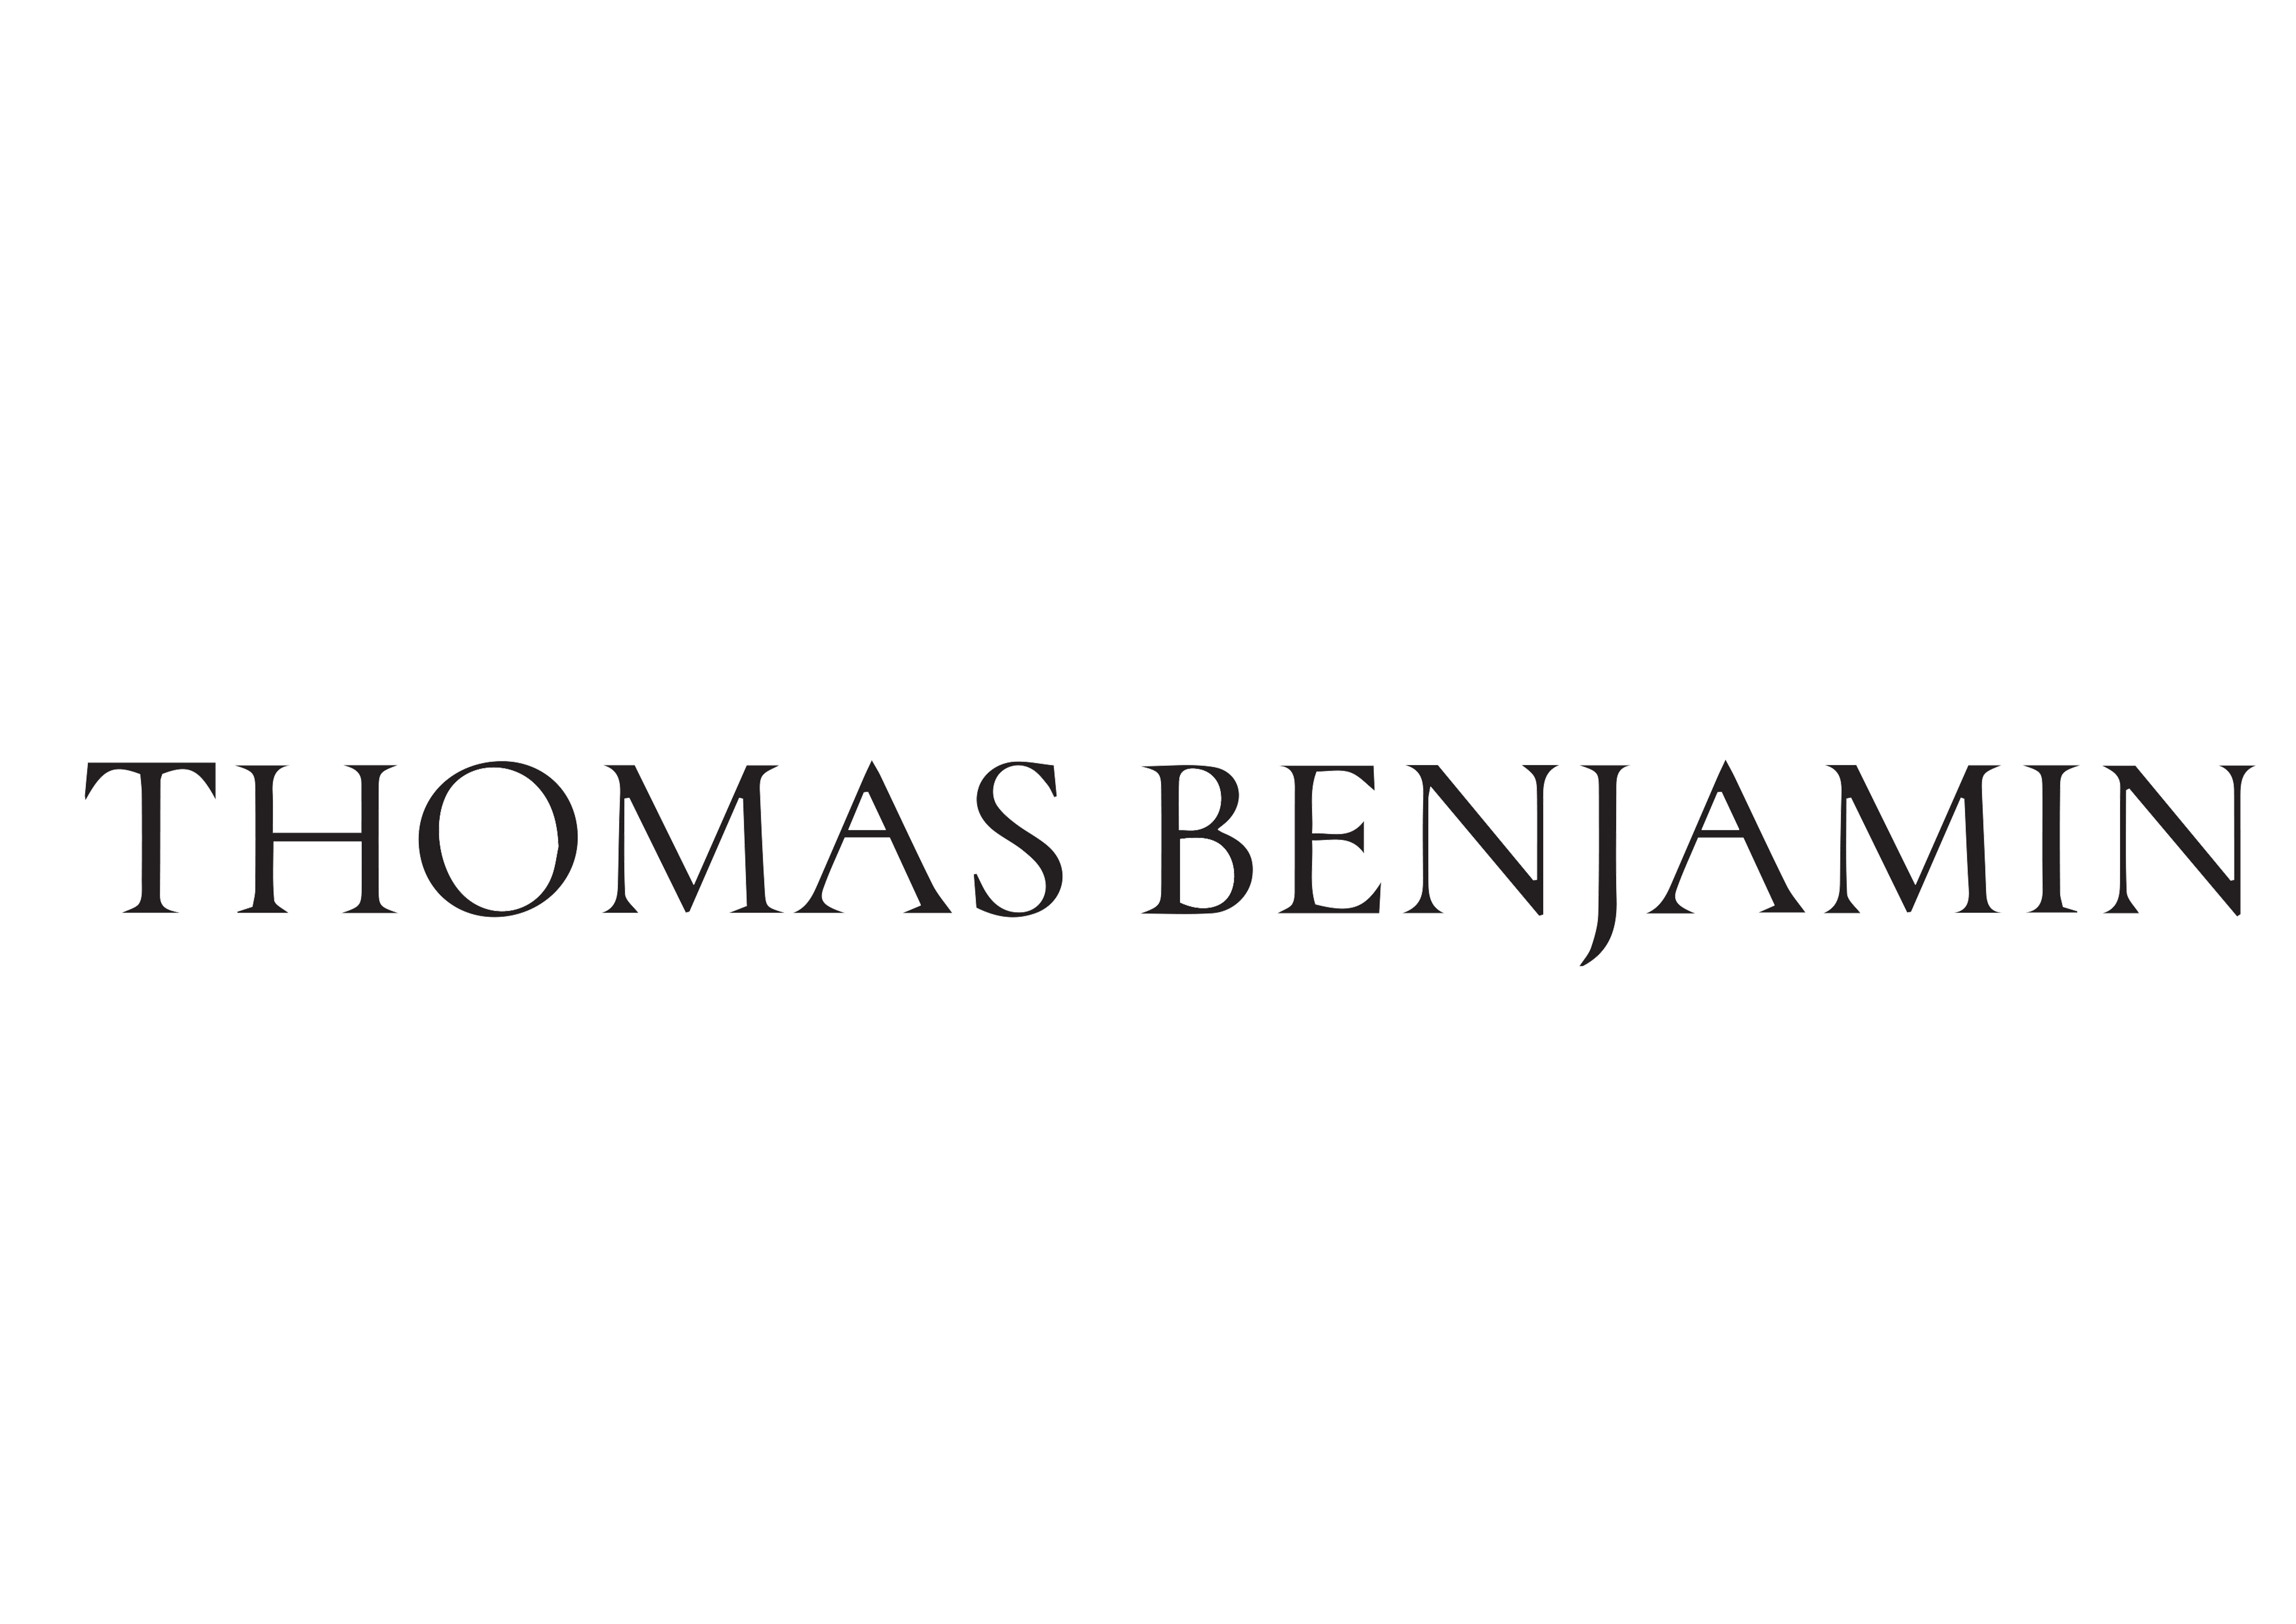 Thomas Benjamin